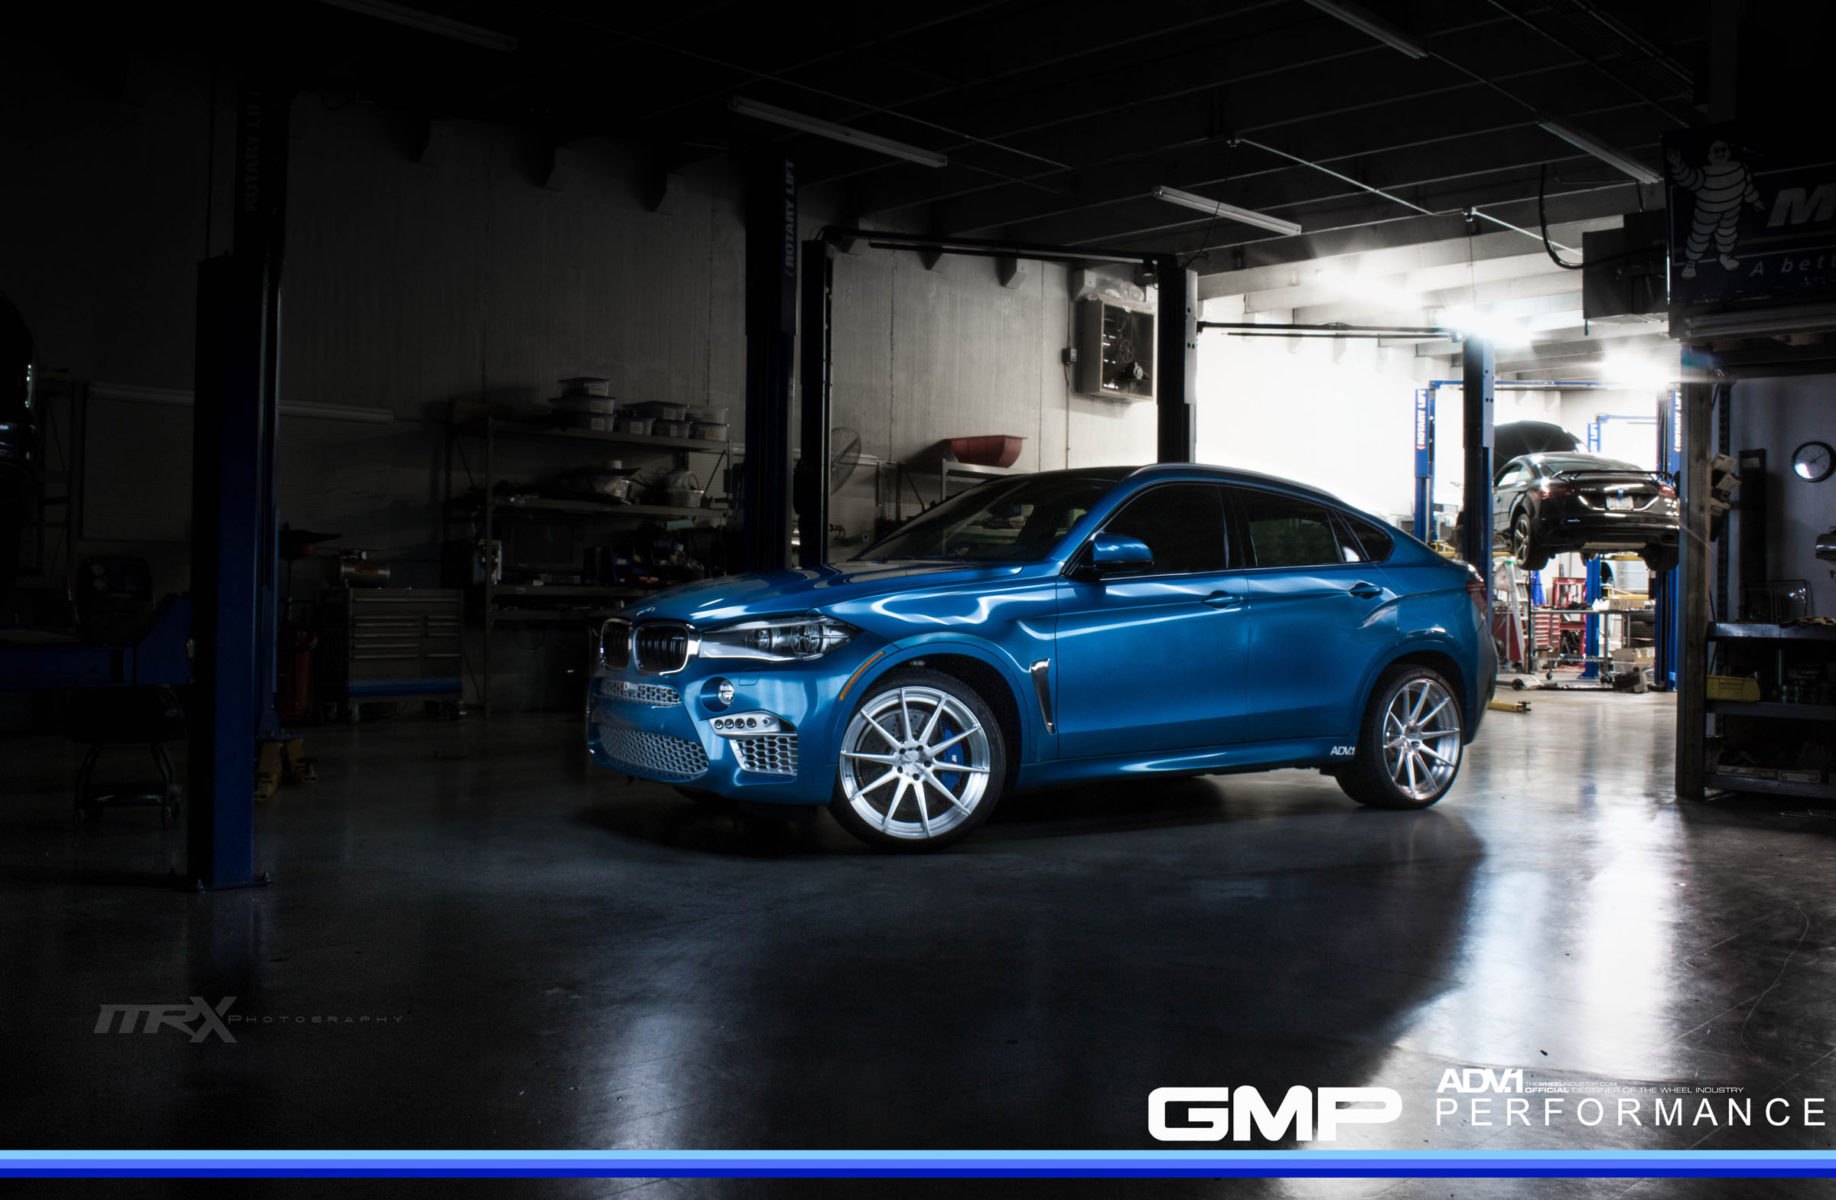 Custom Chrome Grille on Blue BMW X6 - Photo by ADV.1